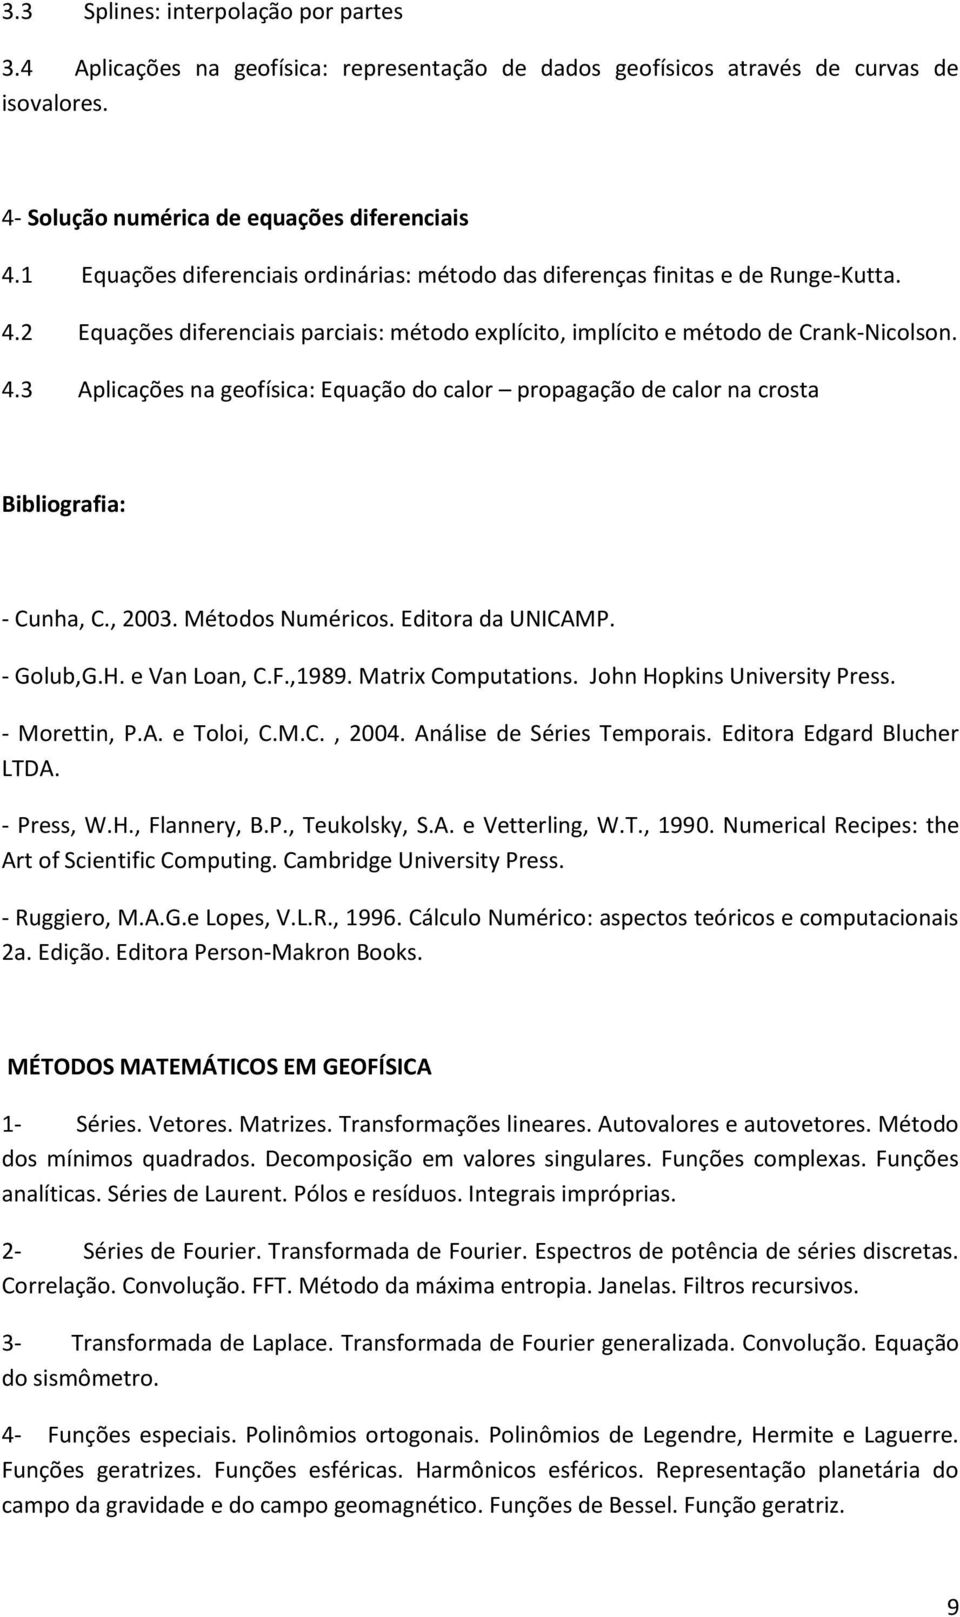 , 2003. Métodos Numéricos. Editora da UNICAMP. - Golub,G.H. e Van Loan, C.F.,1989. Matrix Computations. John Hopkins University Press. - Morettin, P.A. e Toloi, C.M.C., 2004.